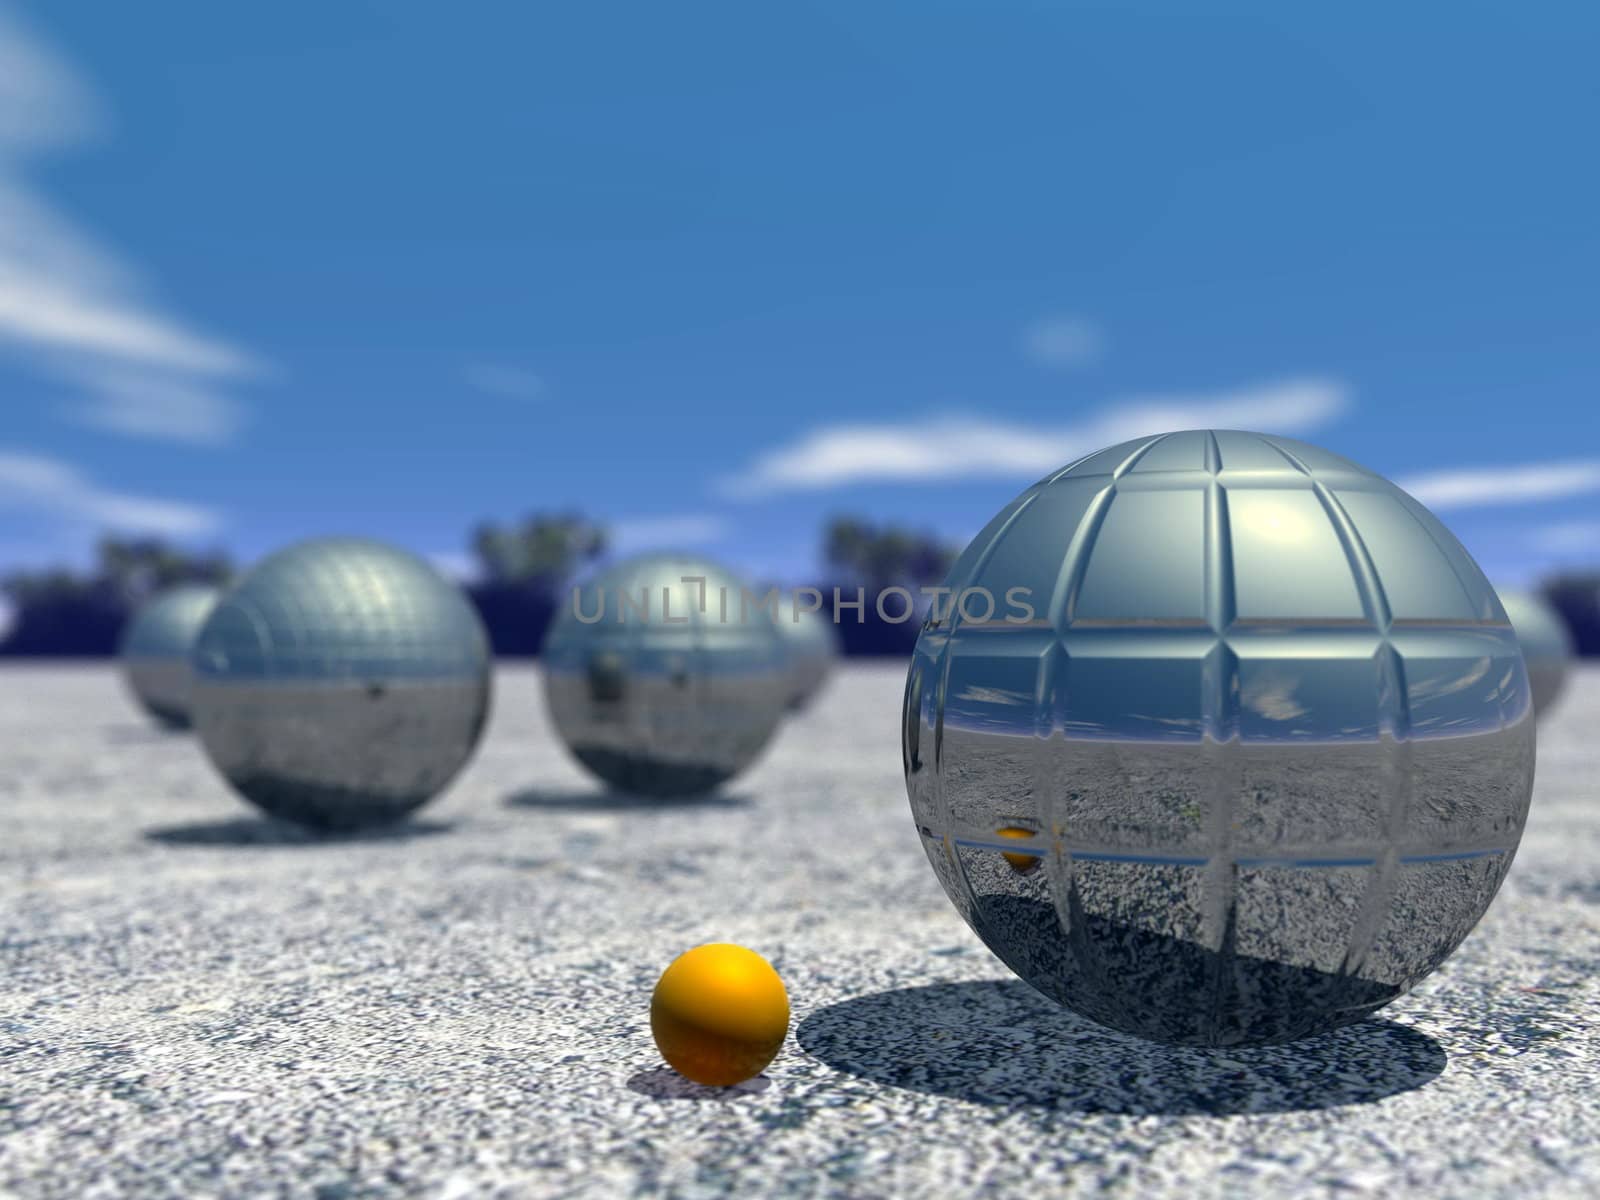 Outdoor petanque game - 3D render by Elenaphotos21